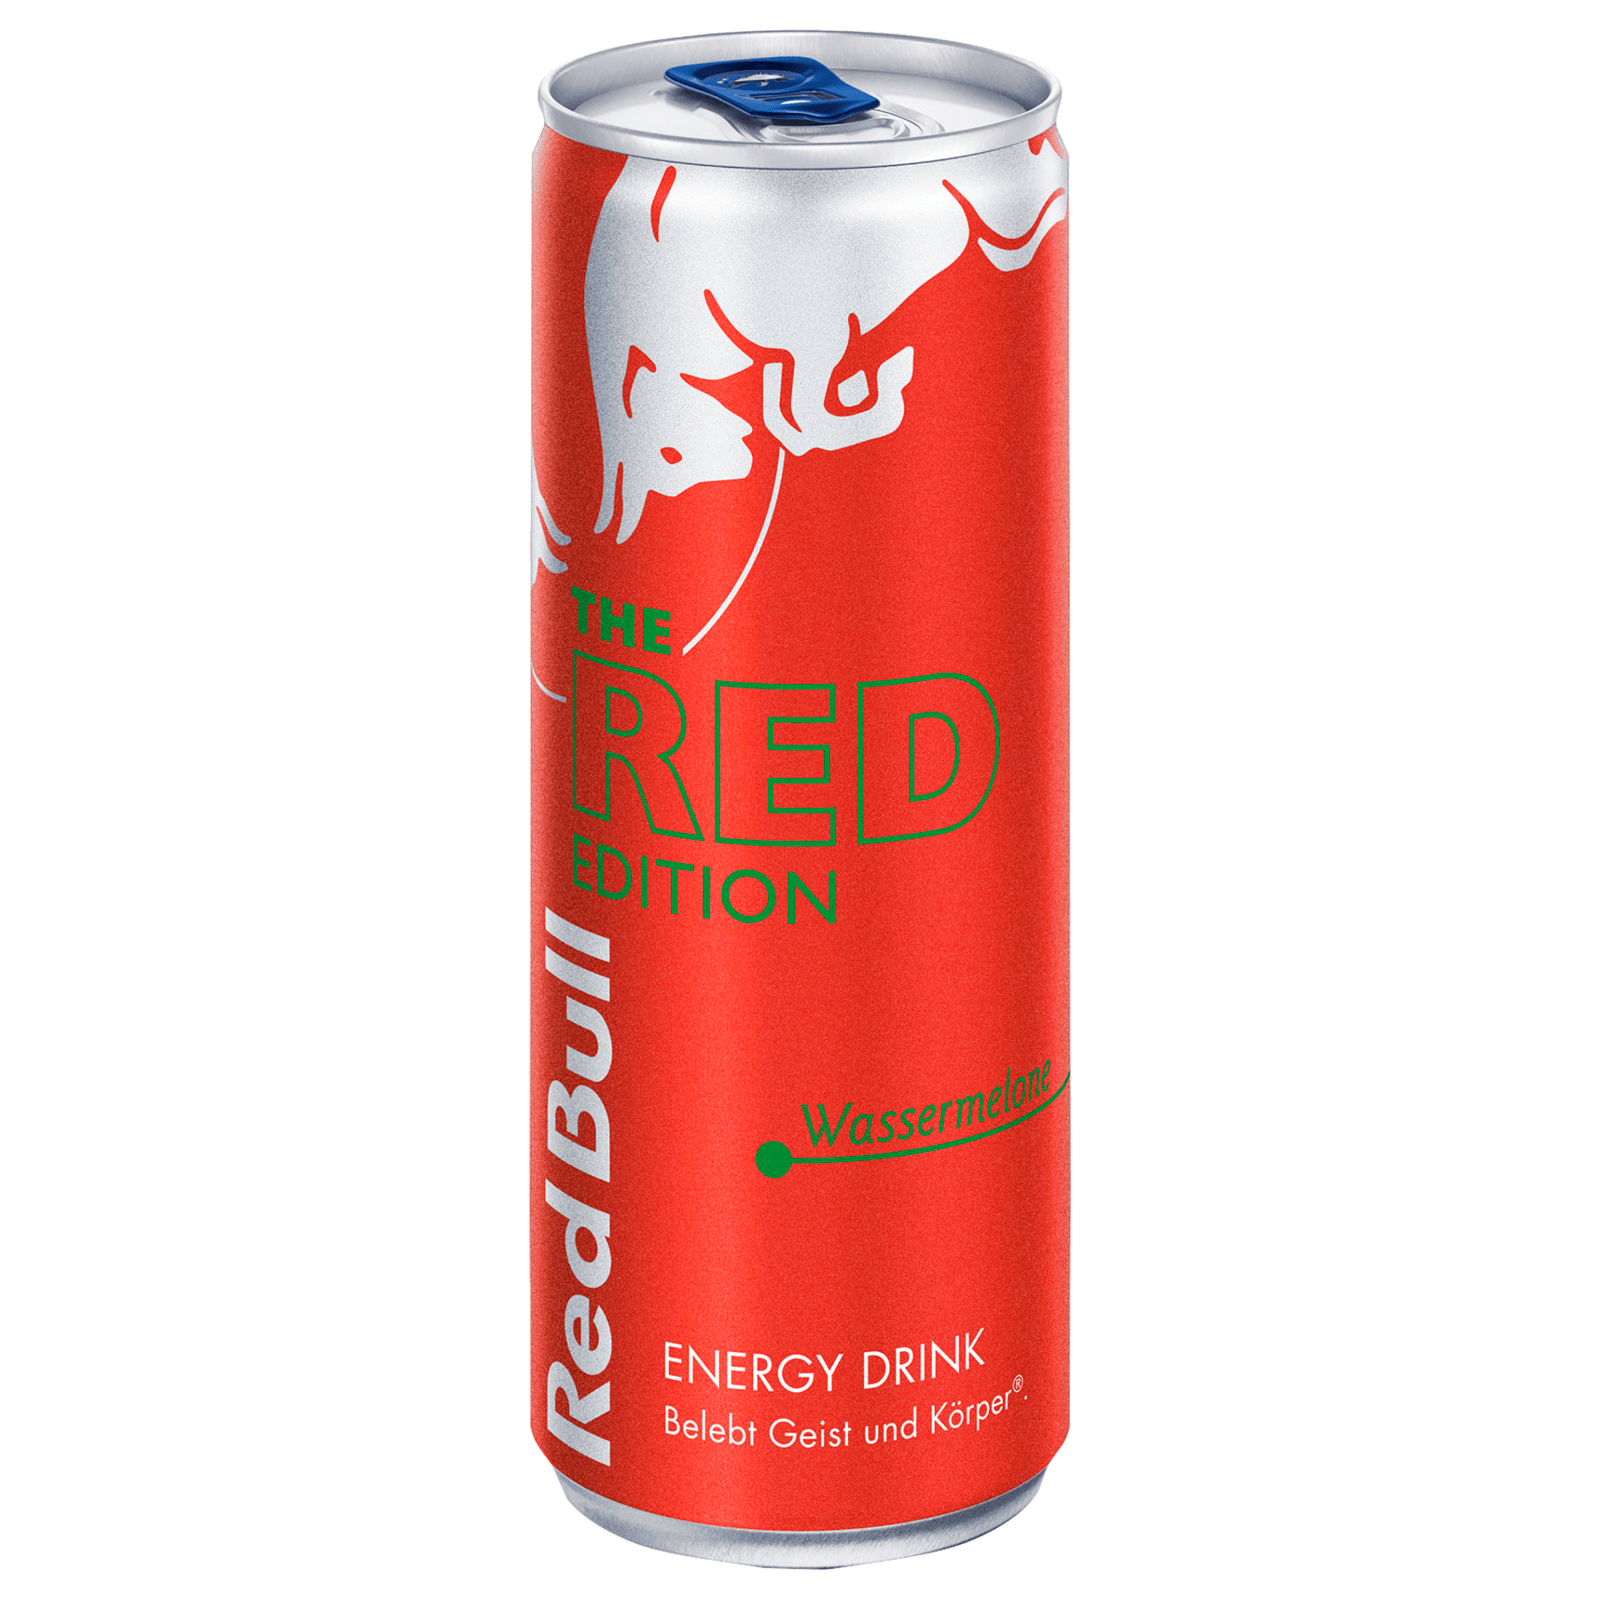 Red Bull Energy Drink Wassermelone 0,25l